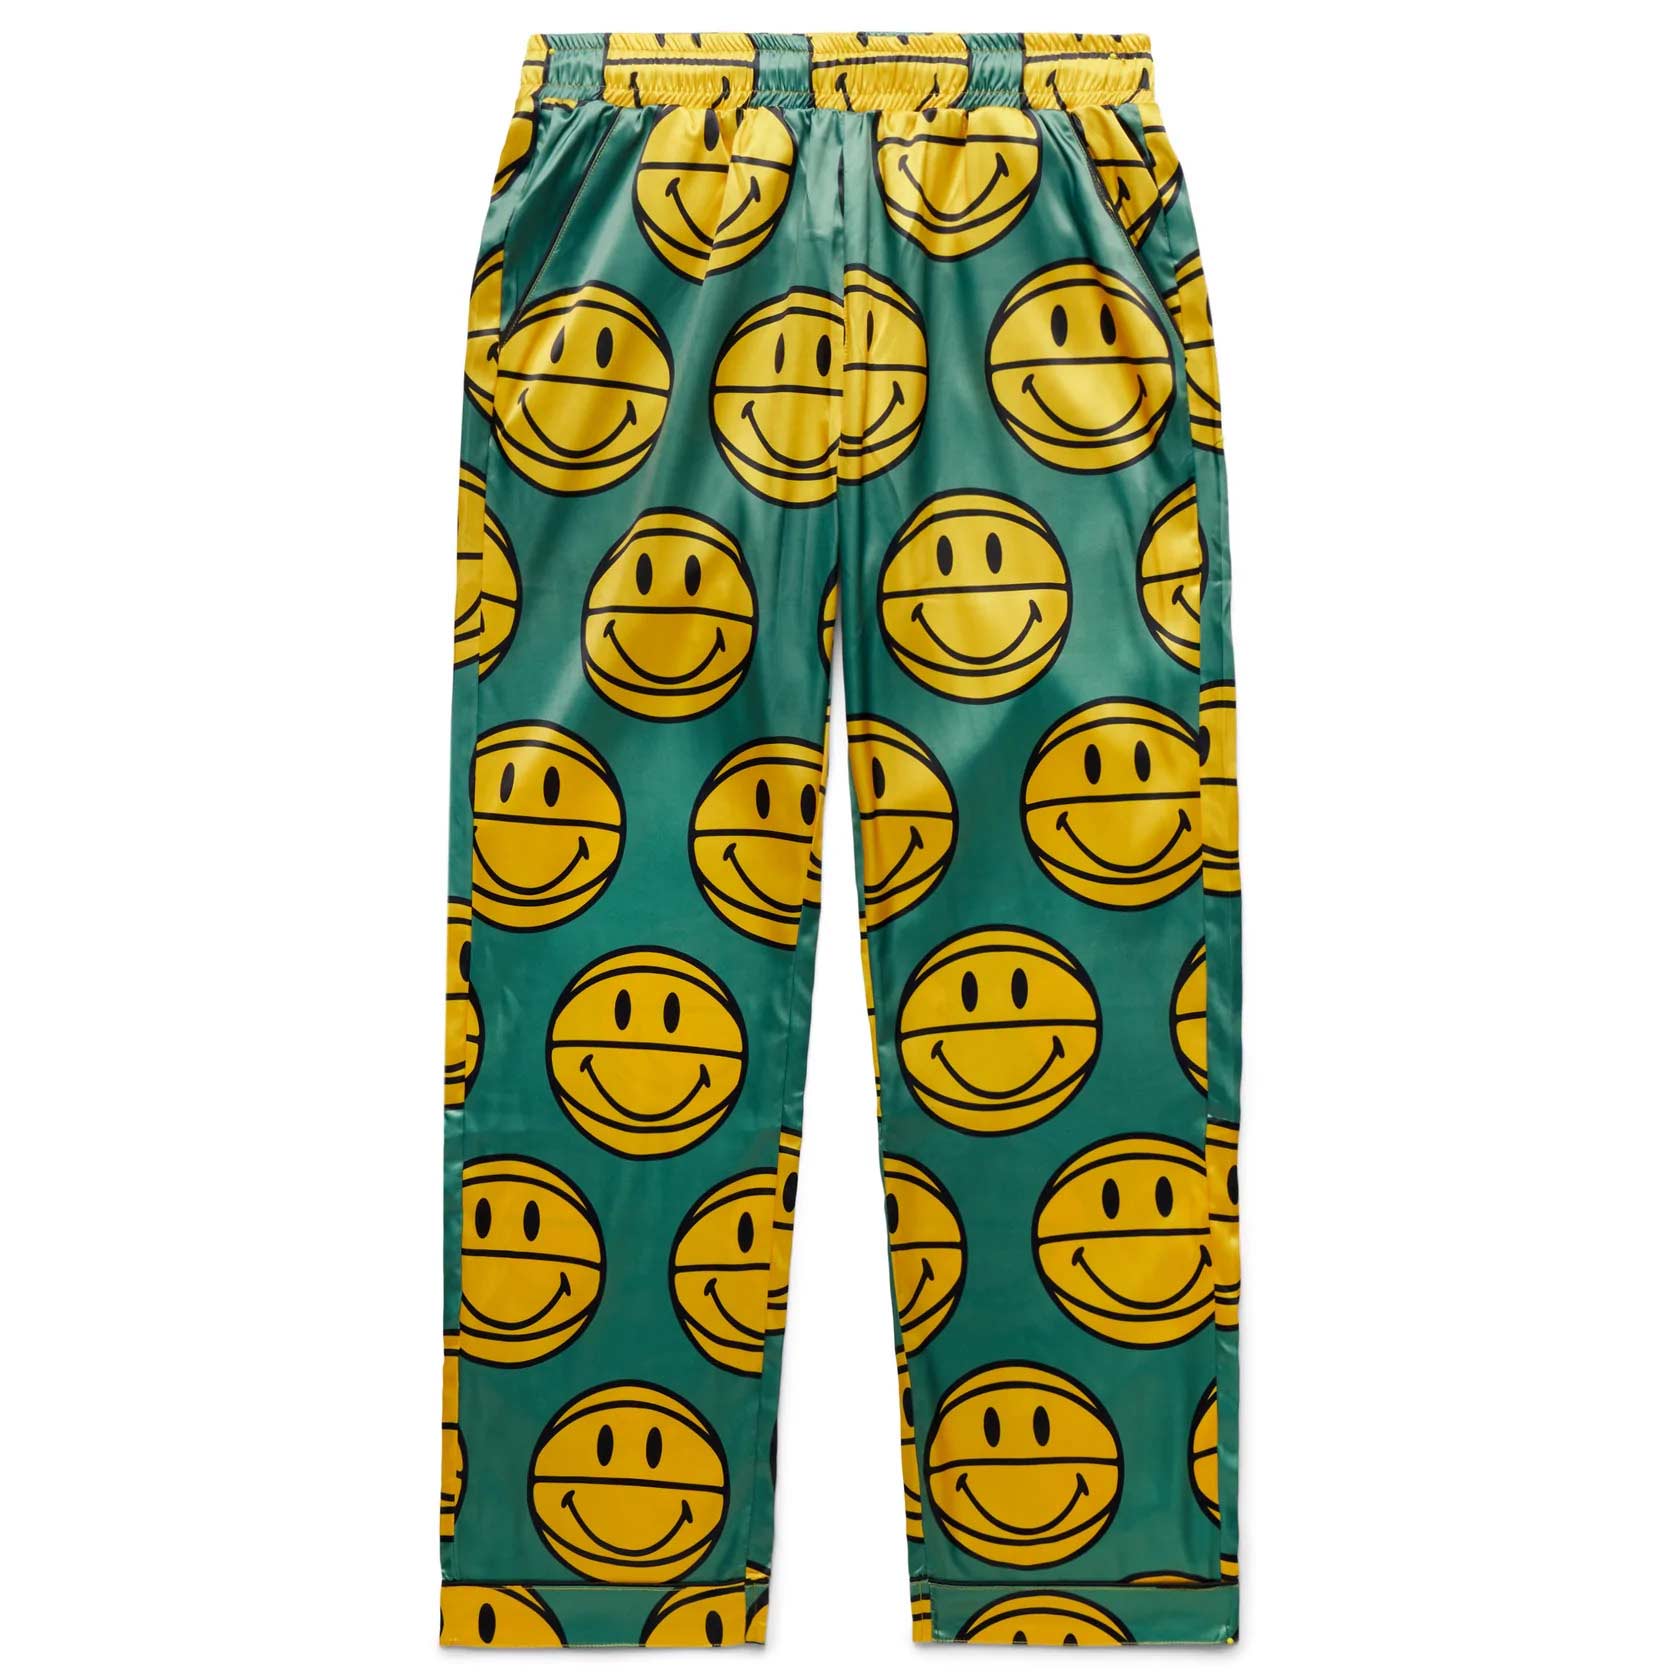 Market-Smiley-Basketball-Pajama-Set-Zupport